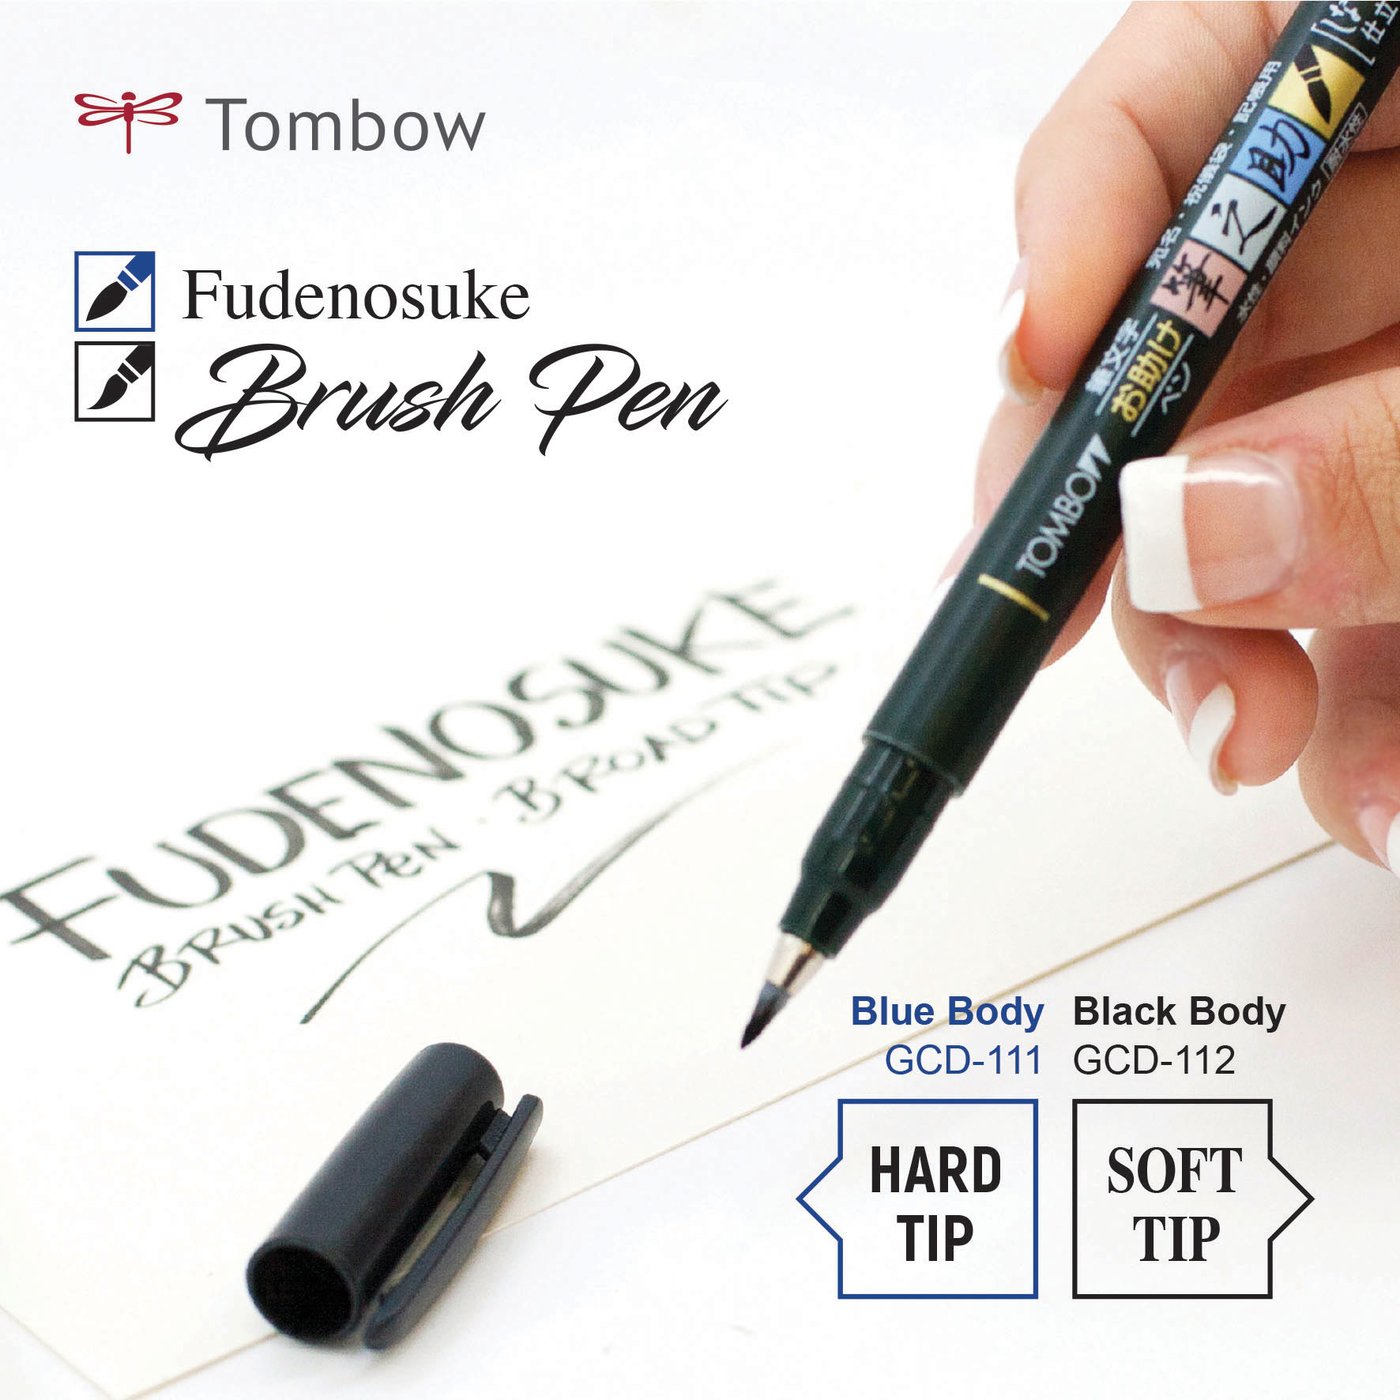 Tombow Fudenosuke brush Pen Hard Tip - Black